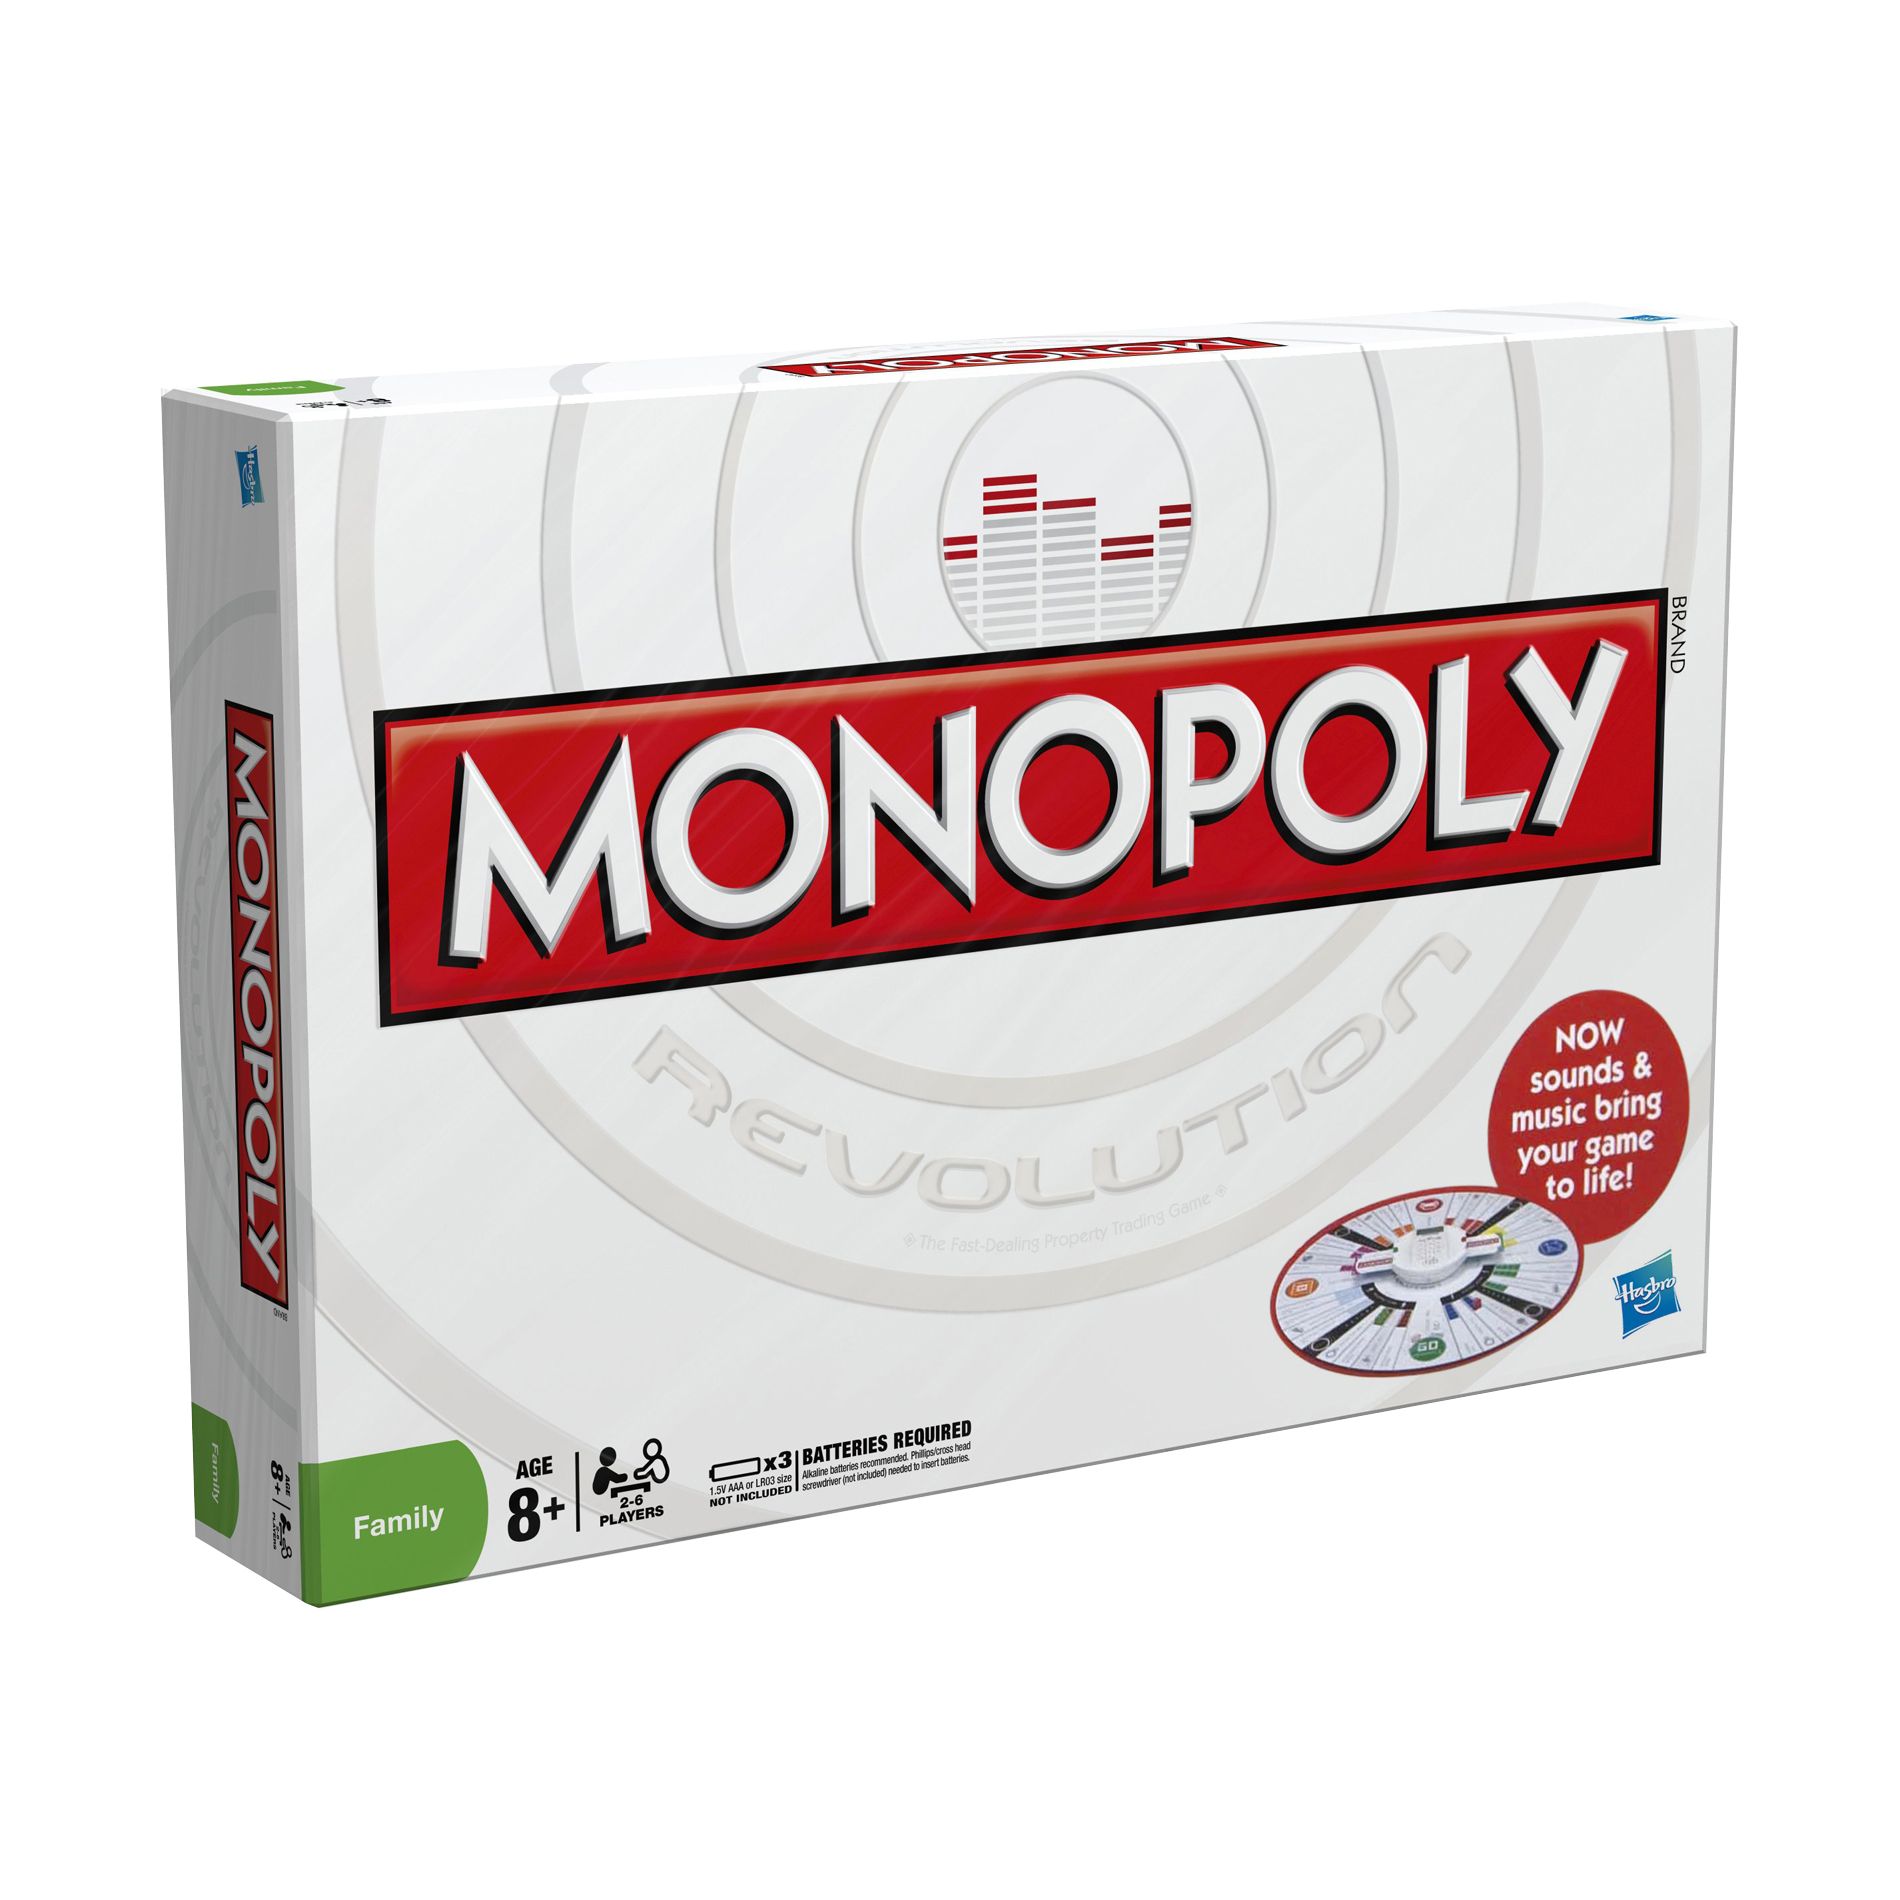 Monopoly Revolution